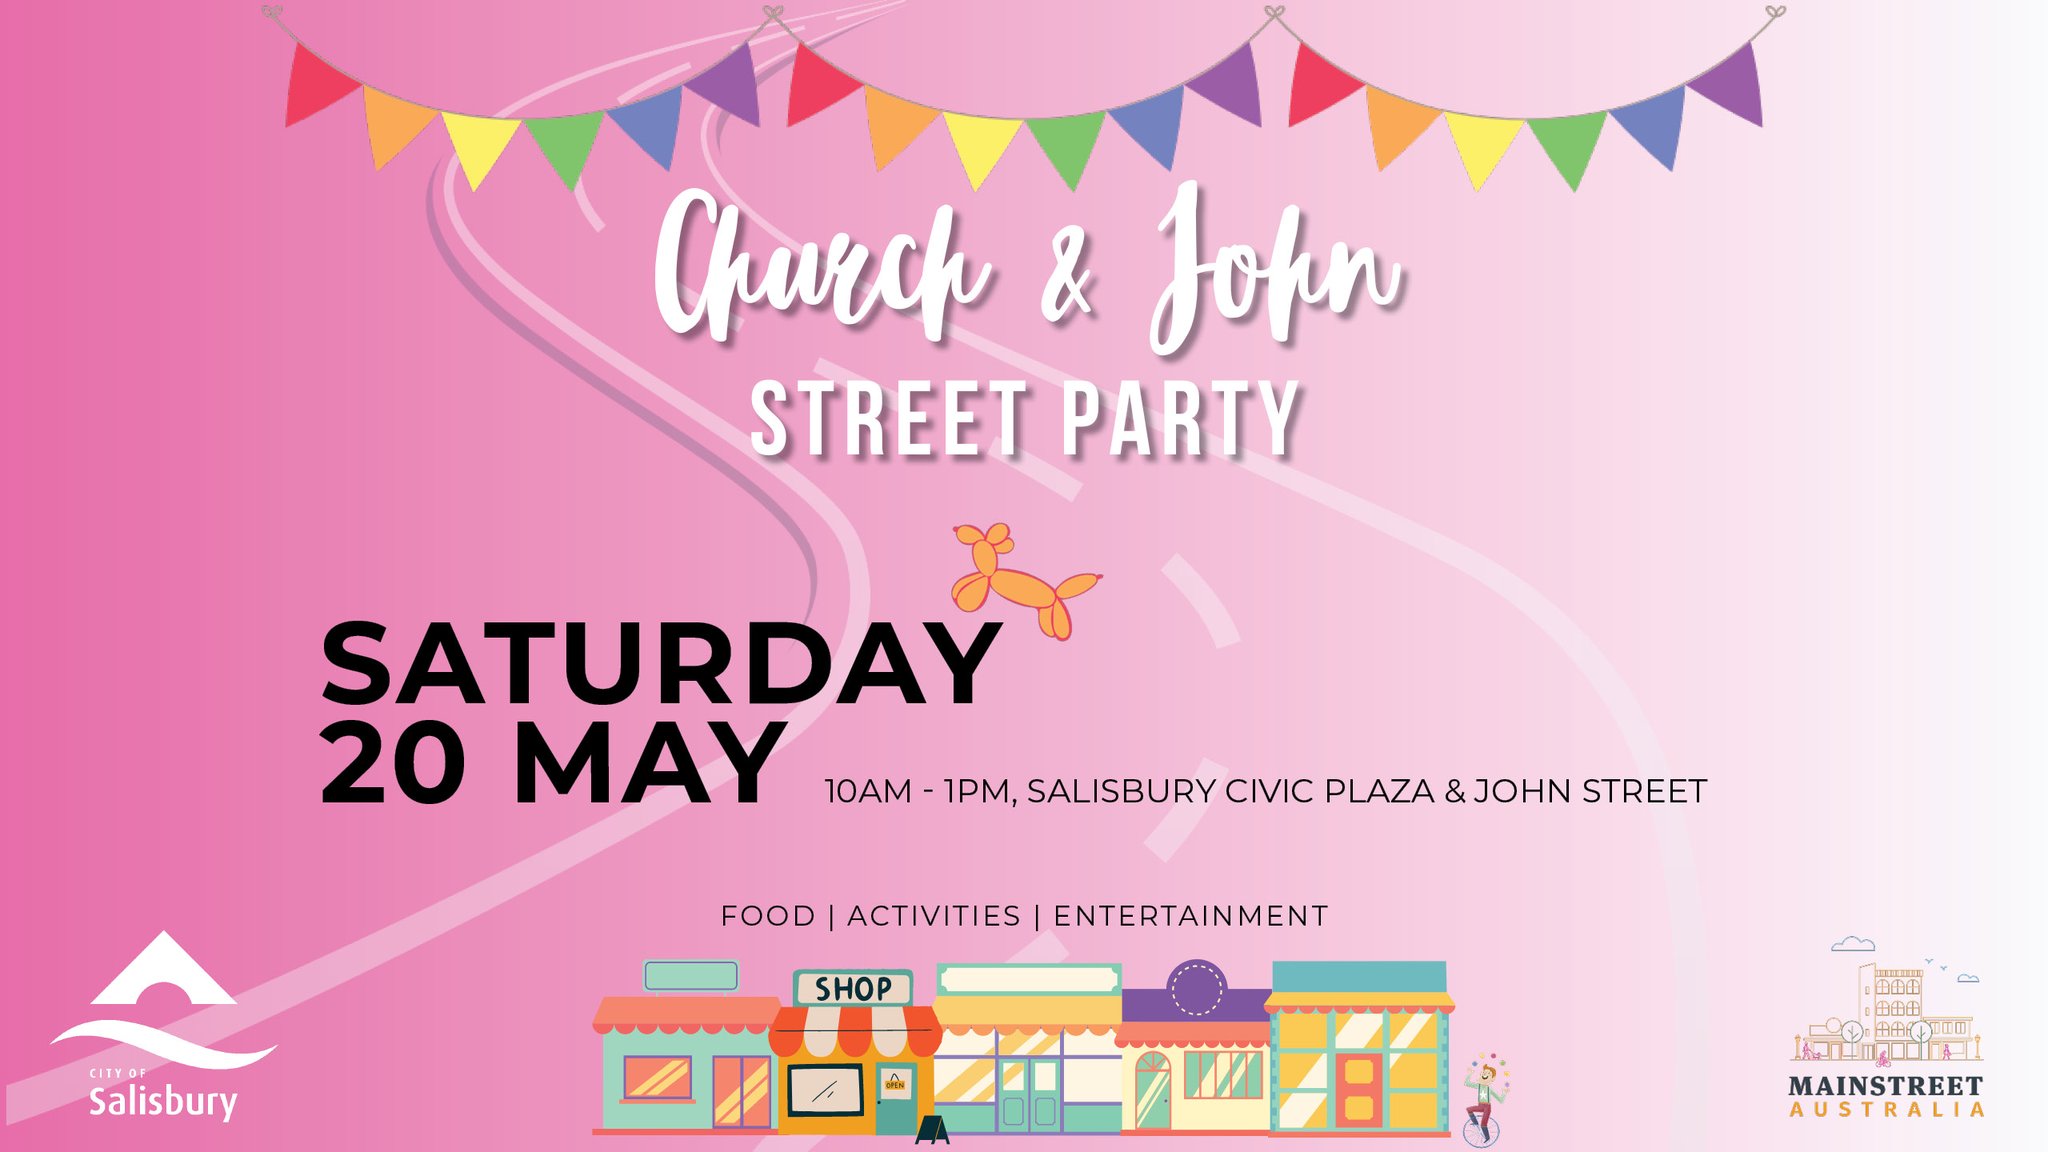 Church & John Street Party